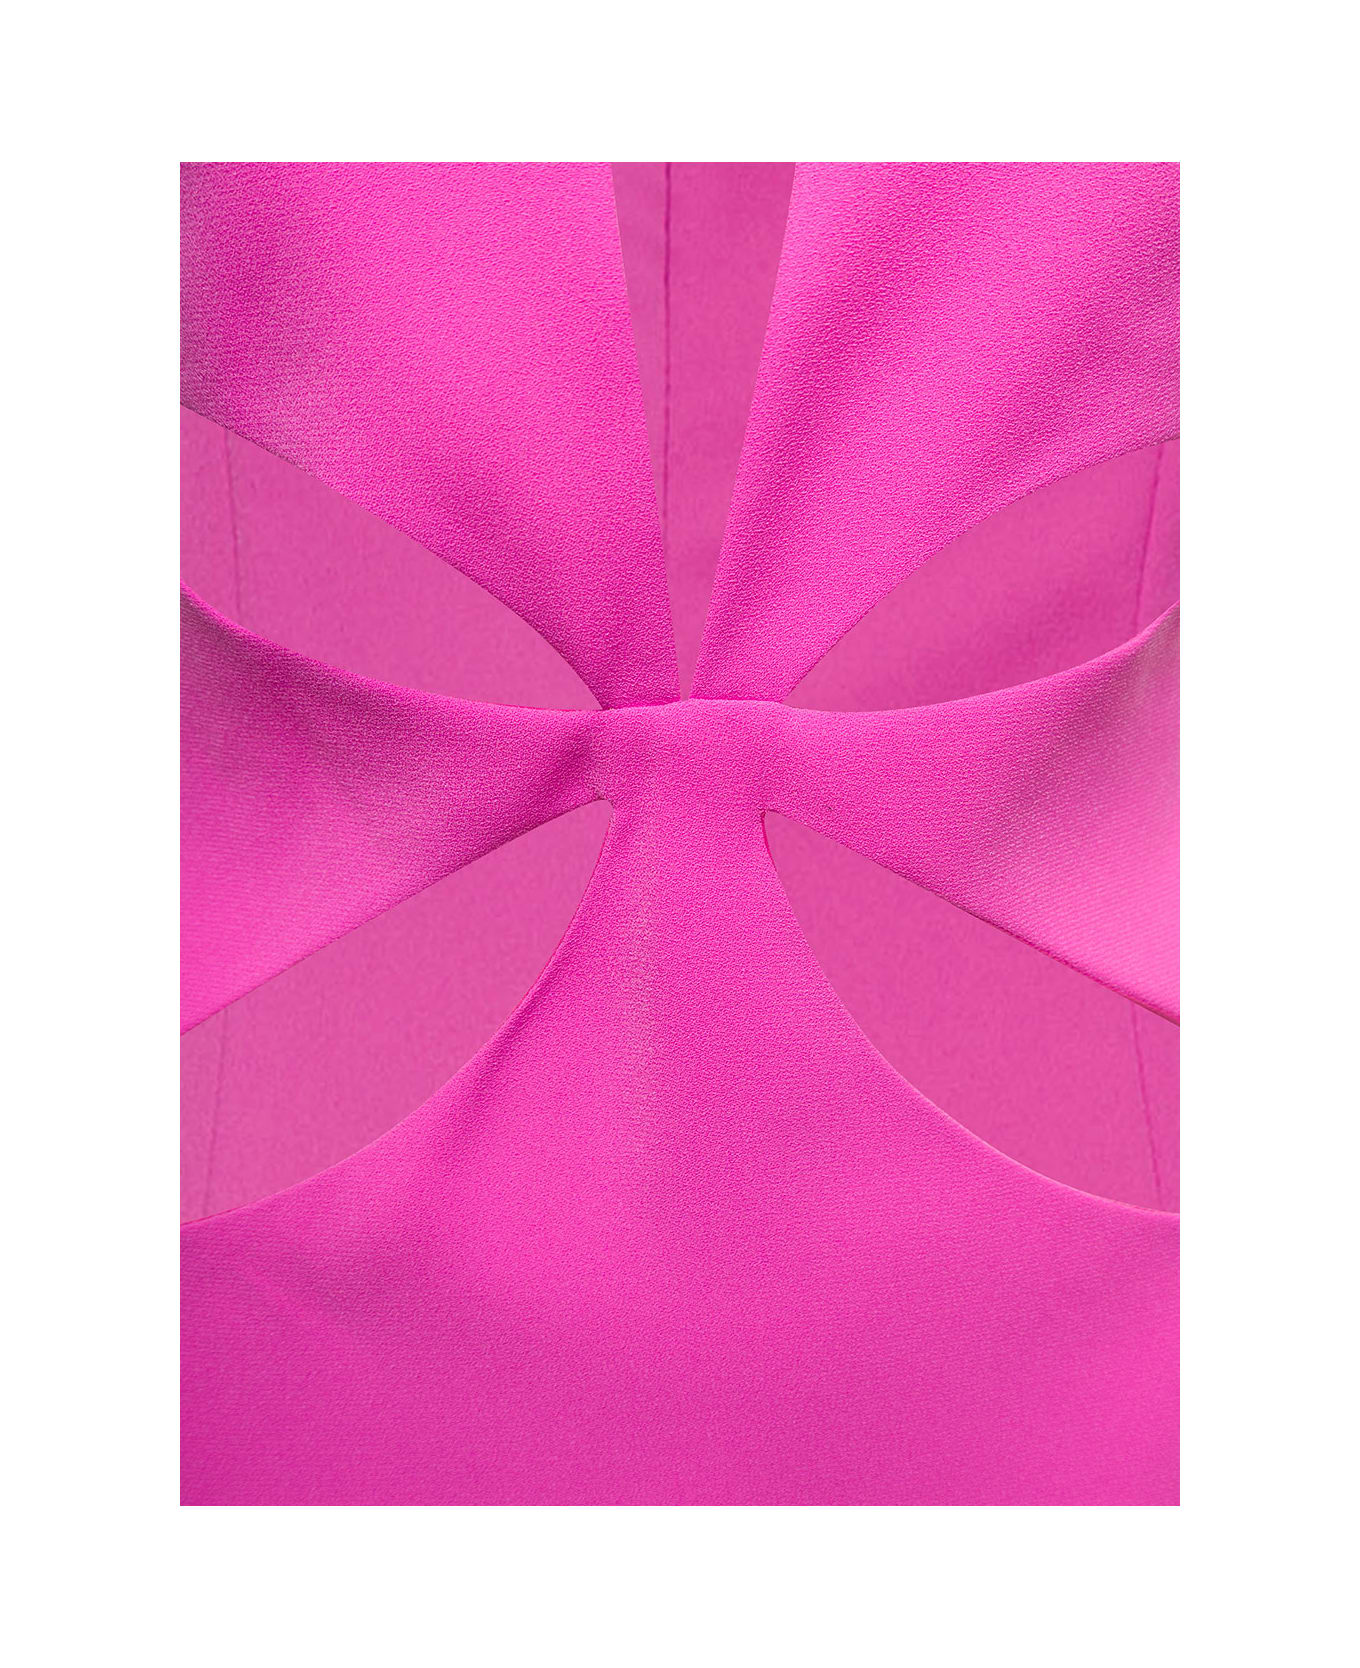 Monot Pink Halterneck Petal Cutout Dress In Tech Fabric Woman - Pink ワンピース＆ドレス